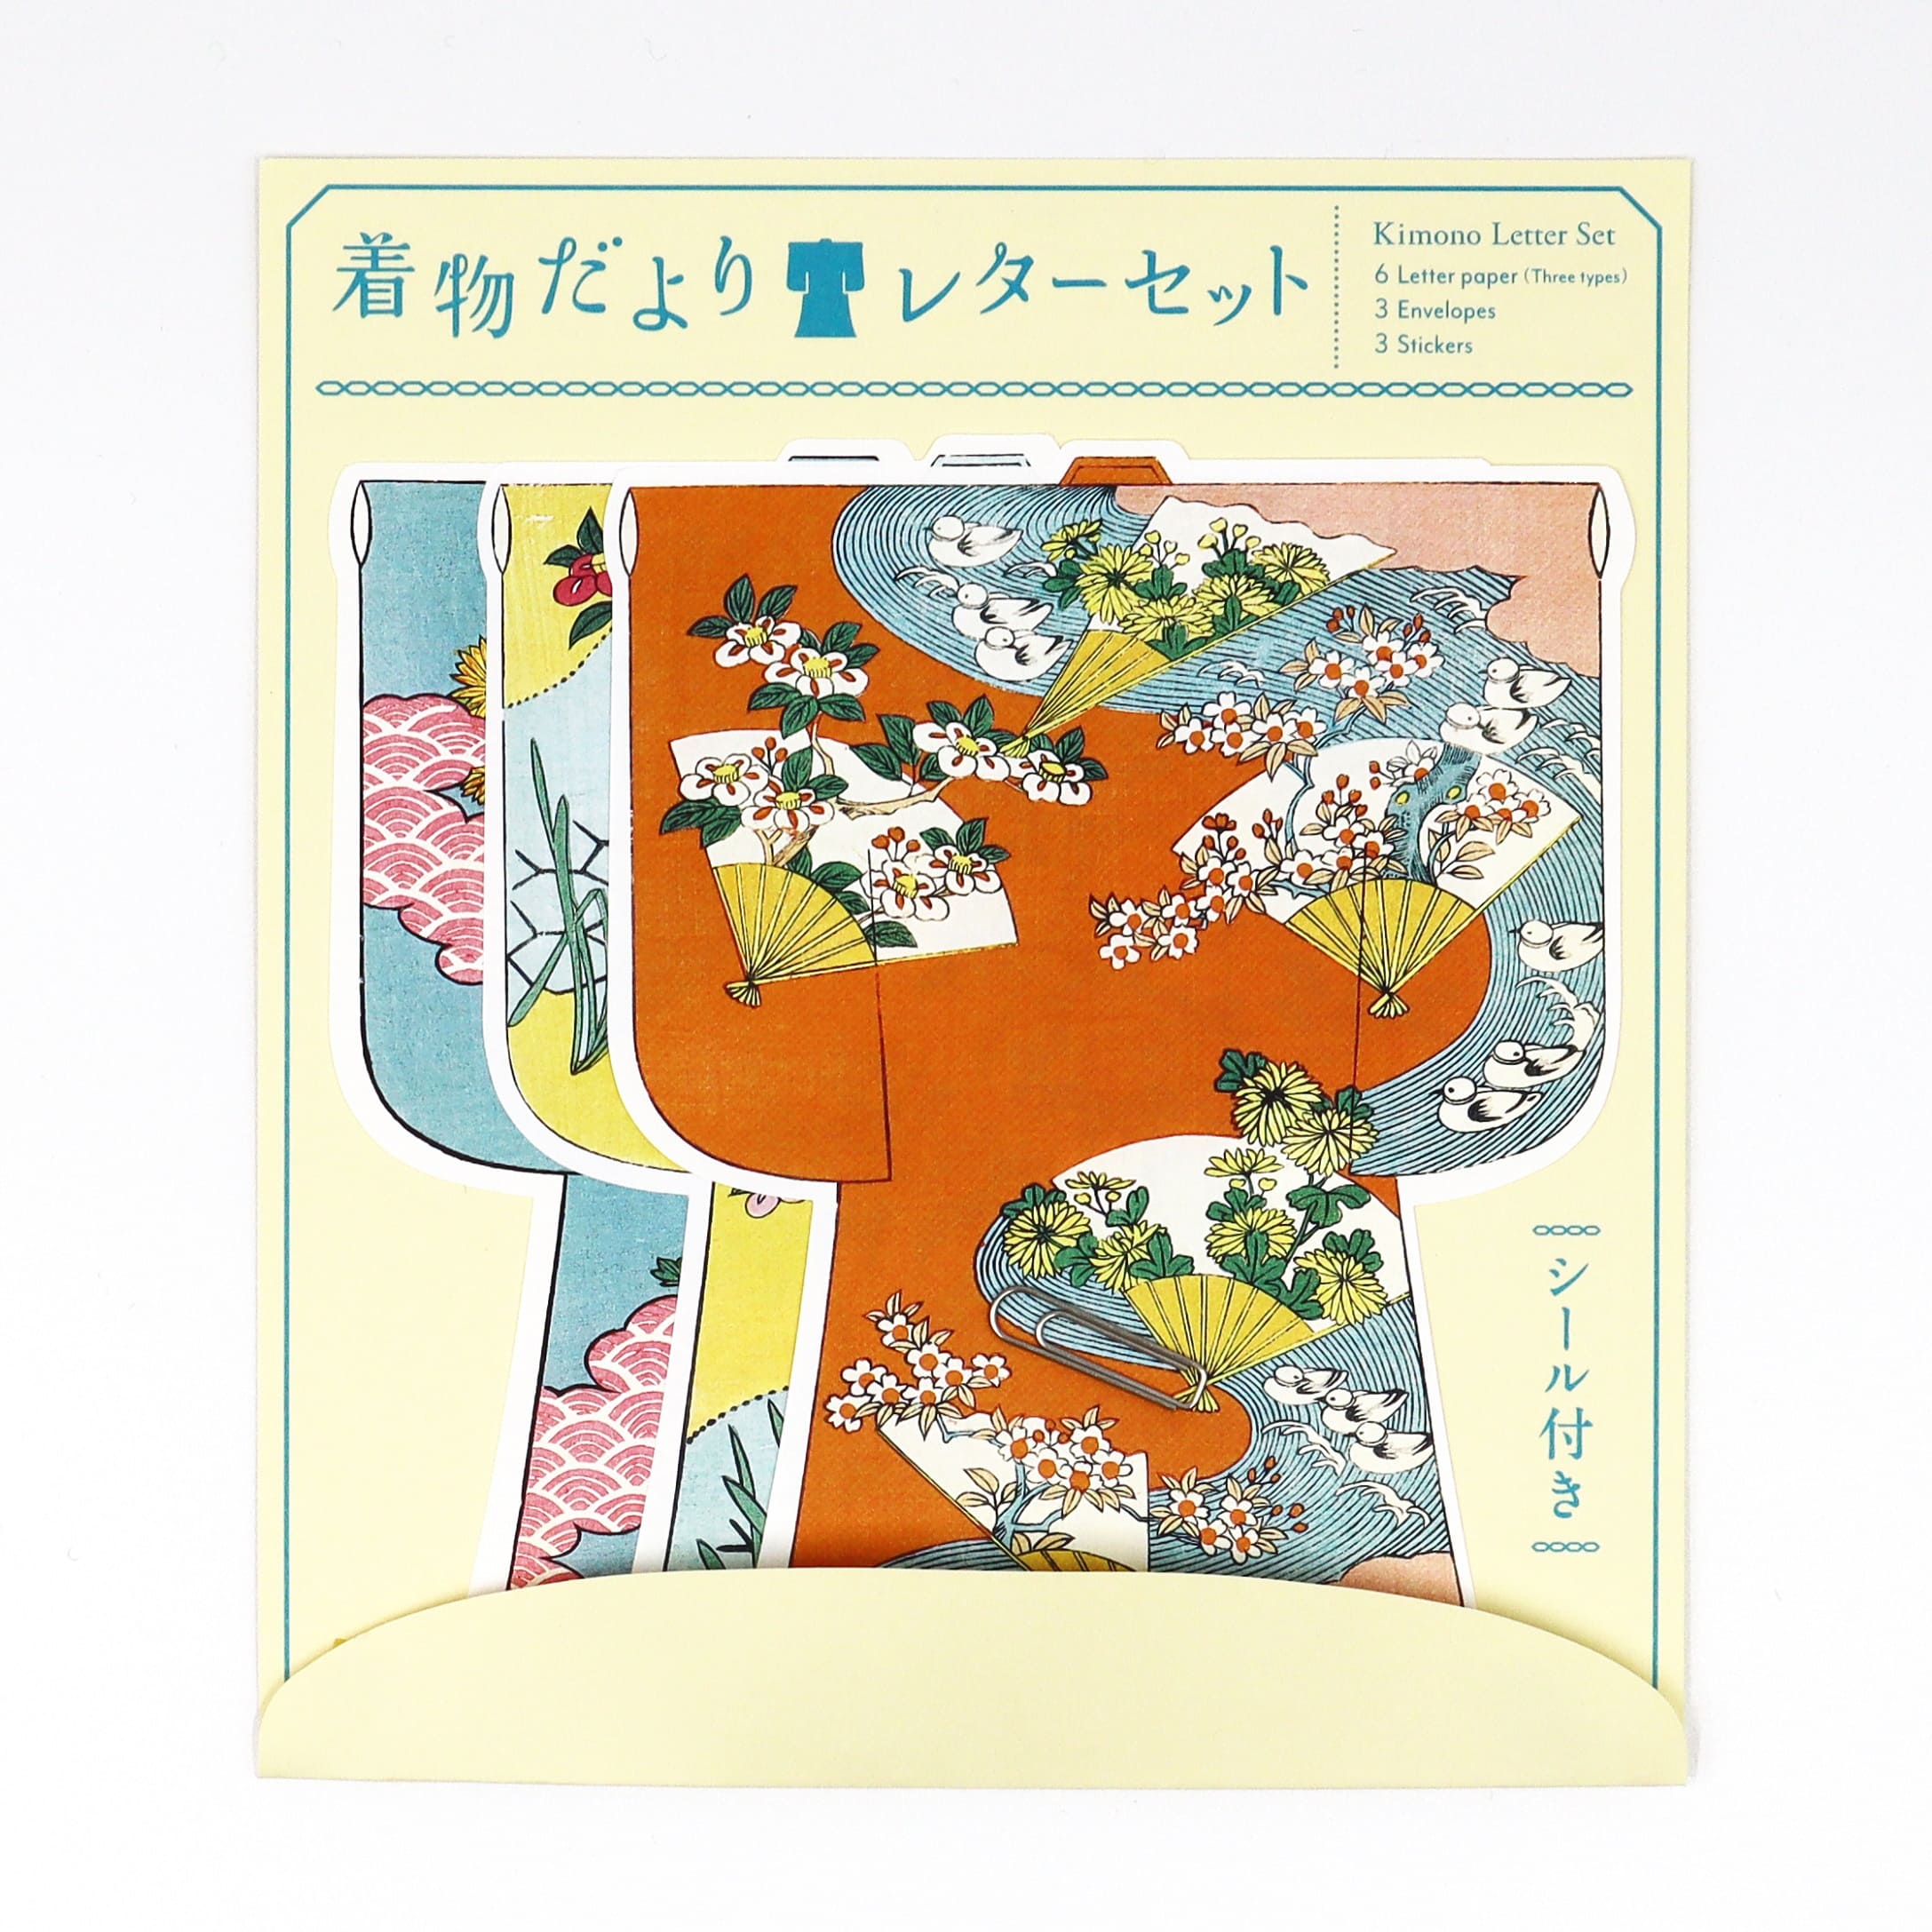 KIMONO Letter Set - Hanayagi